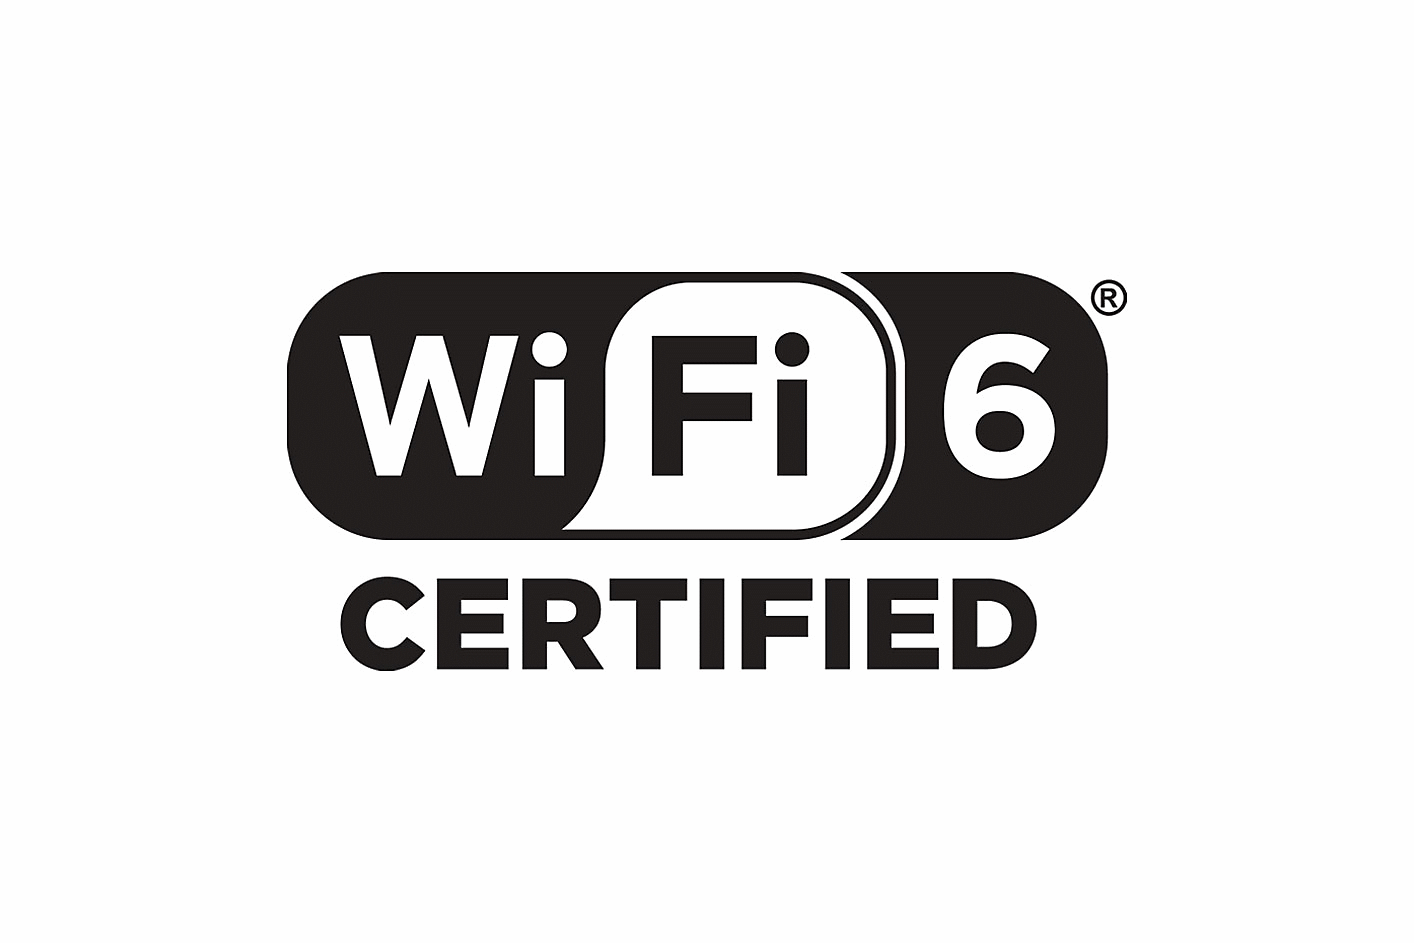 Image of a WiFi 6 CERTIFIED logo